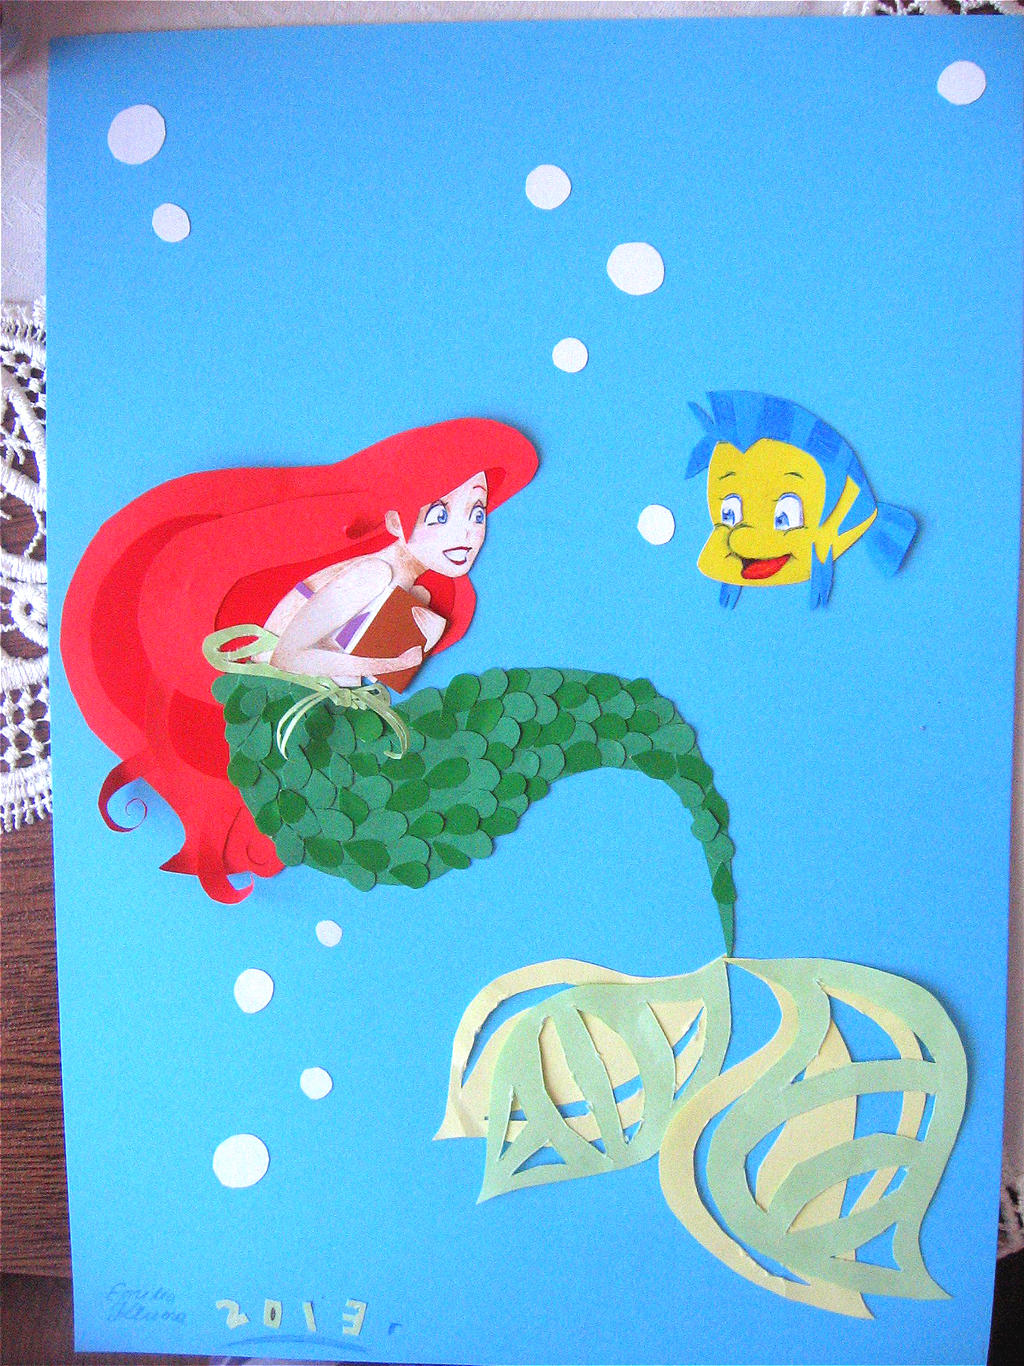 The Little Mermaid: papercutting (?)